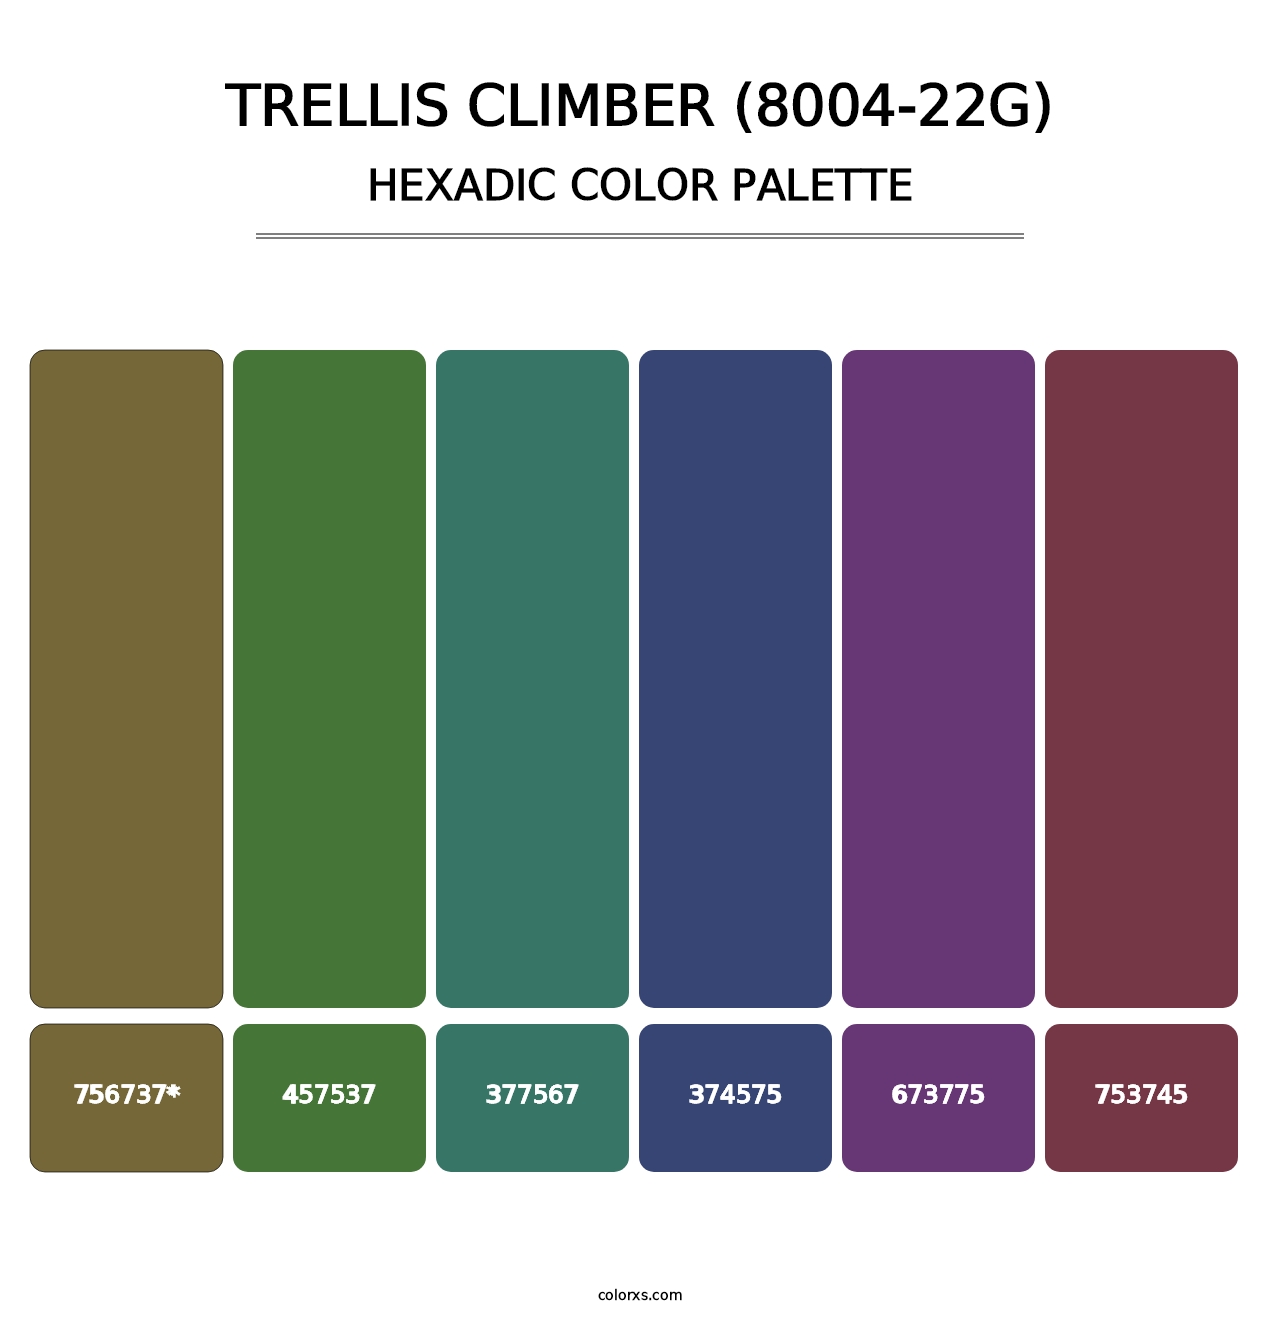 Trellis Climber (8004-22G) - Hexadic Color Palette